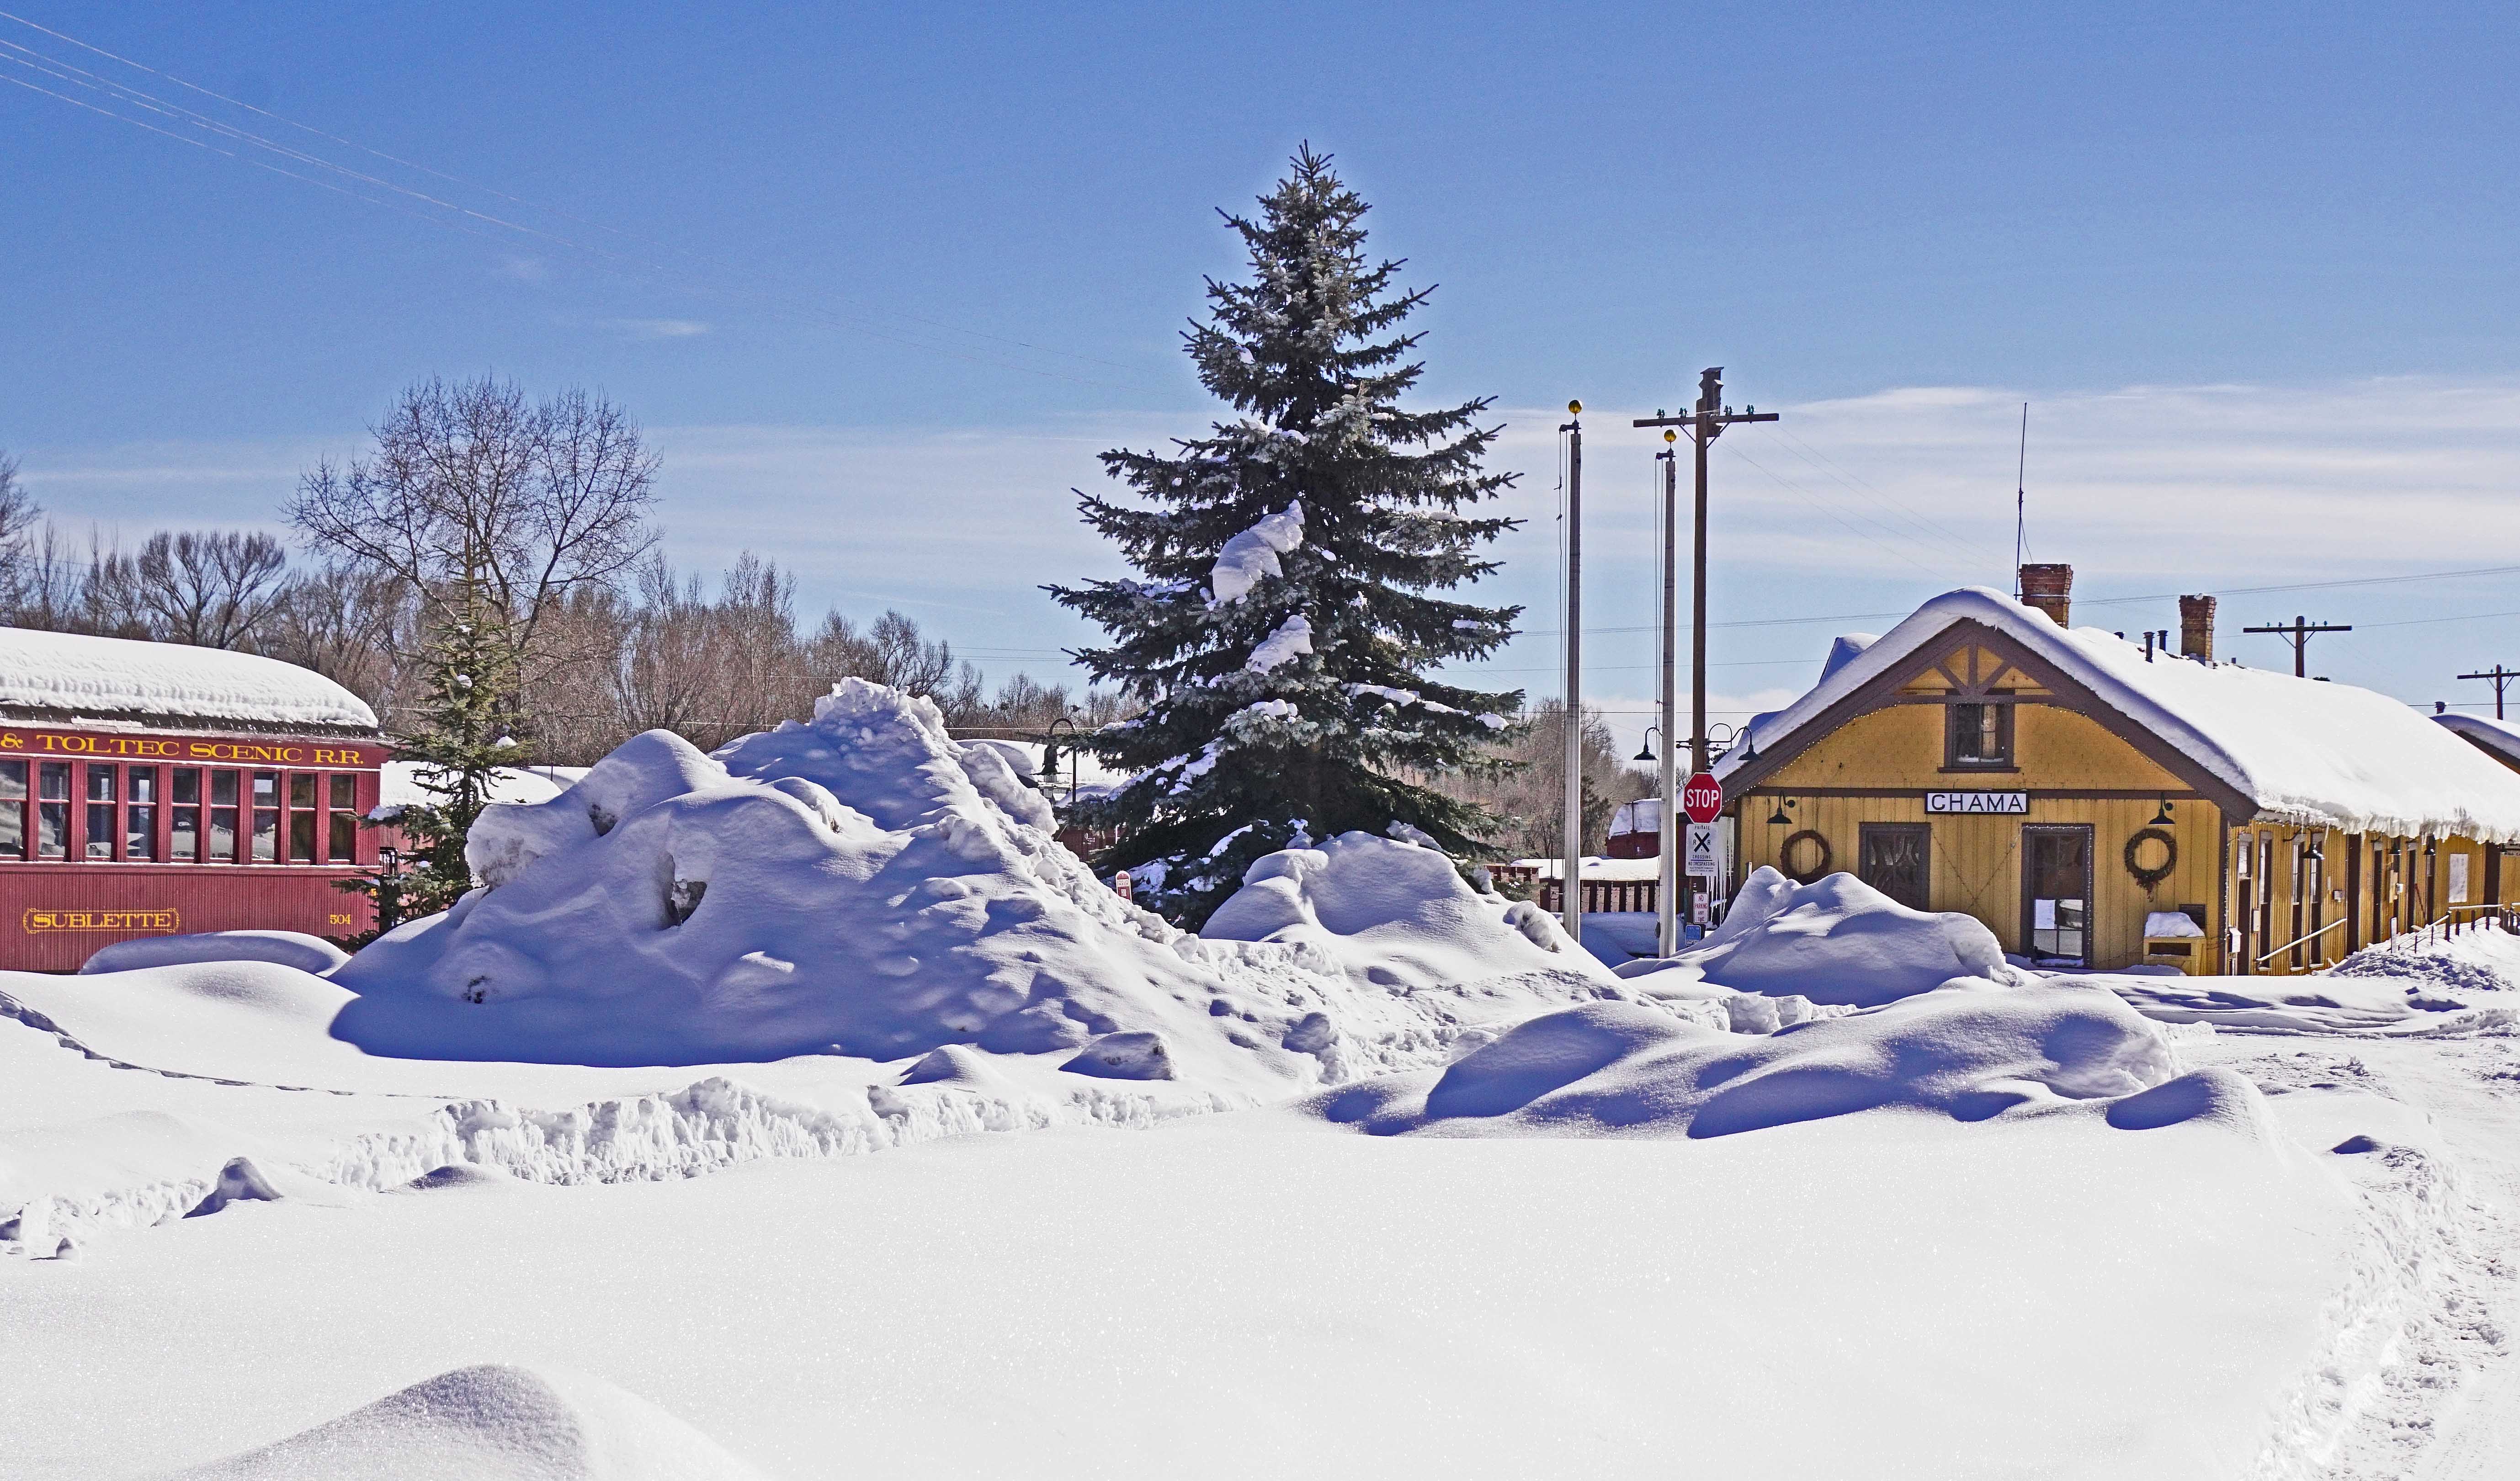 Chama Depot in Snow 1-17.jpg